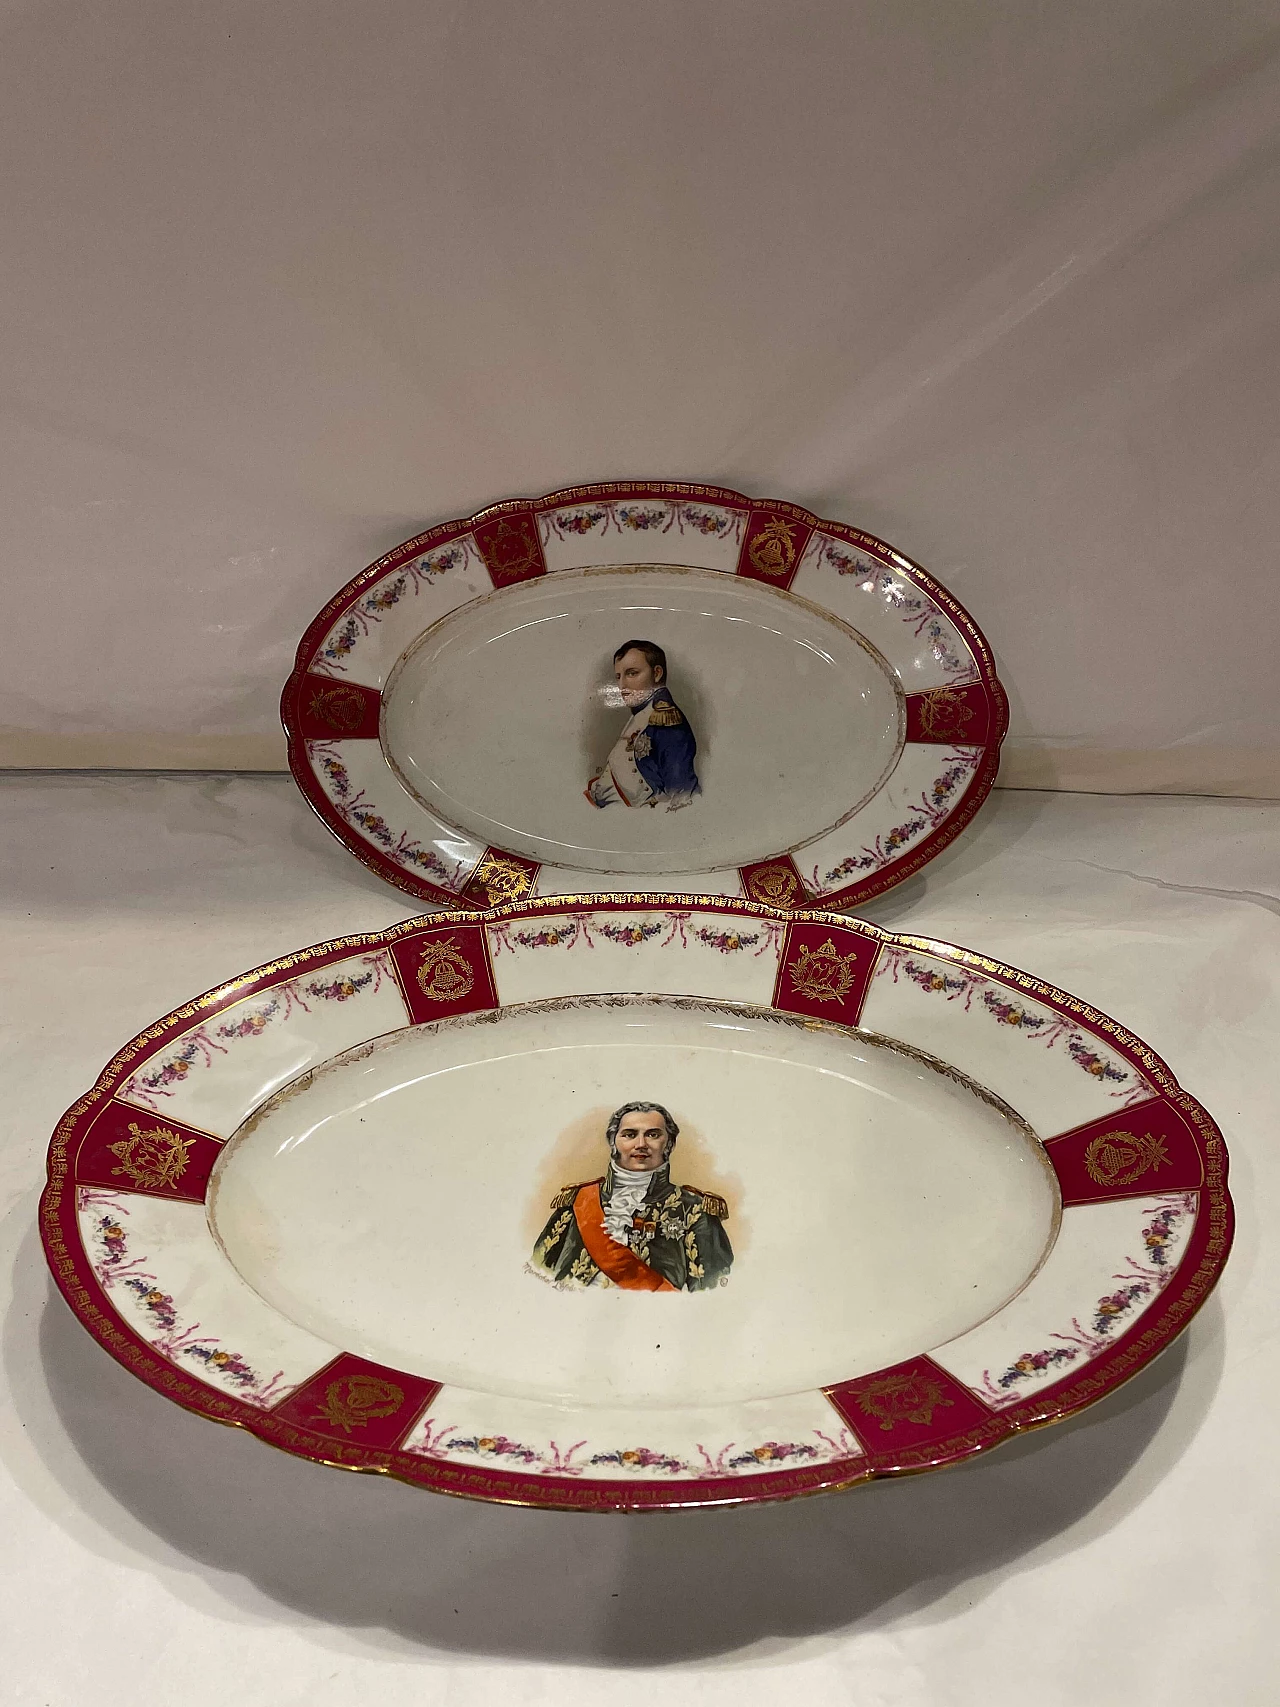 Pair of porcelain plates with portrait of Napoleon by KPM 2